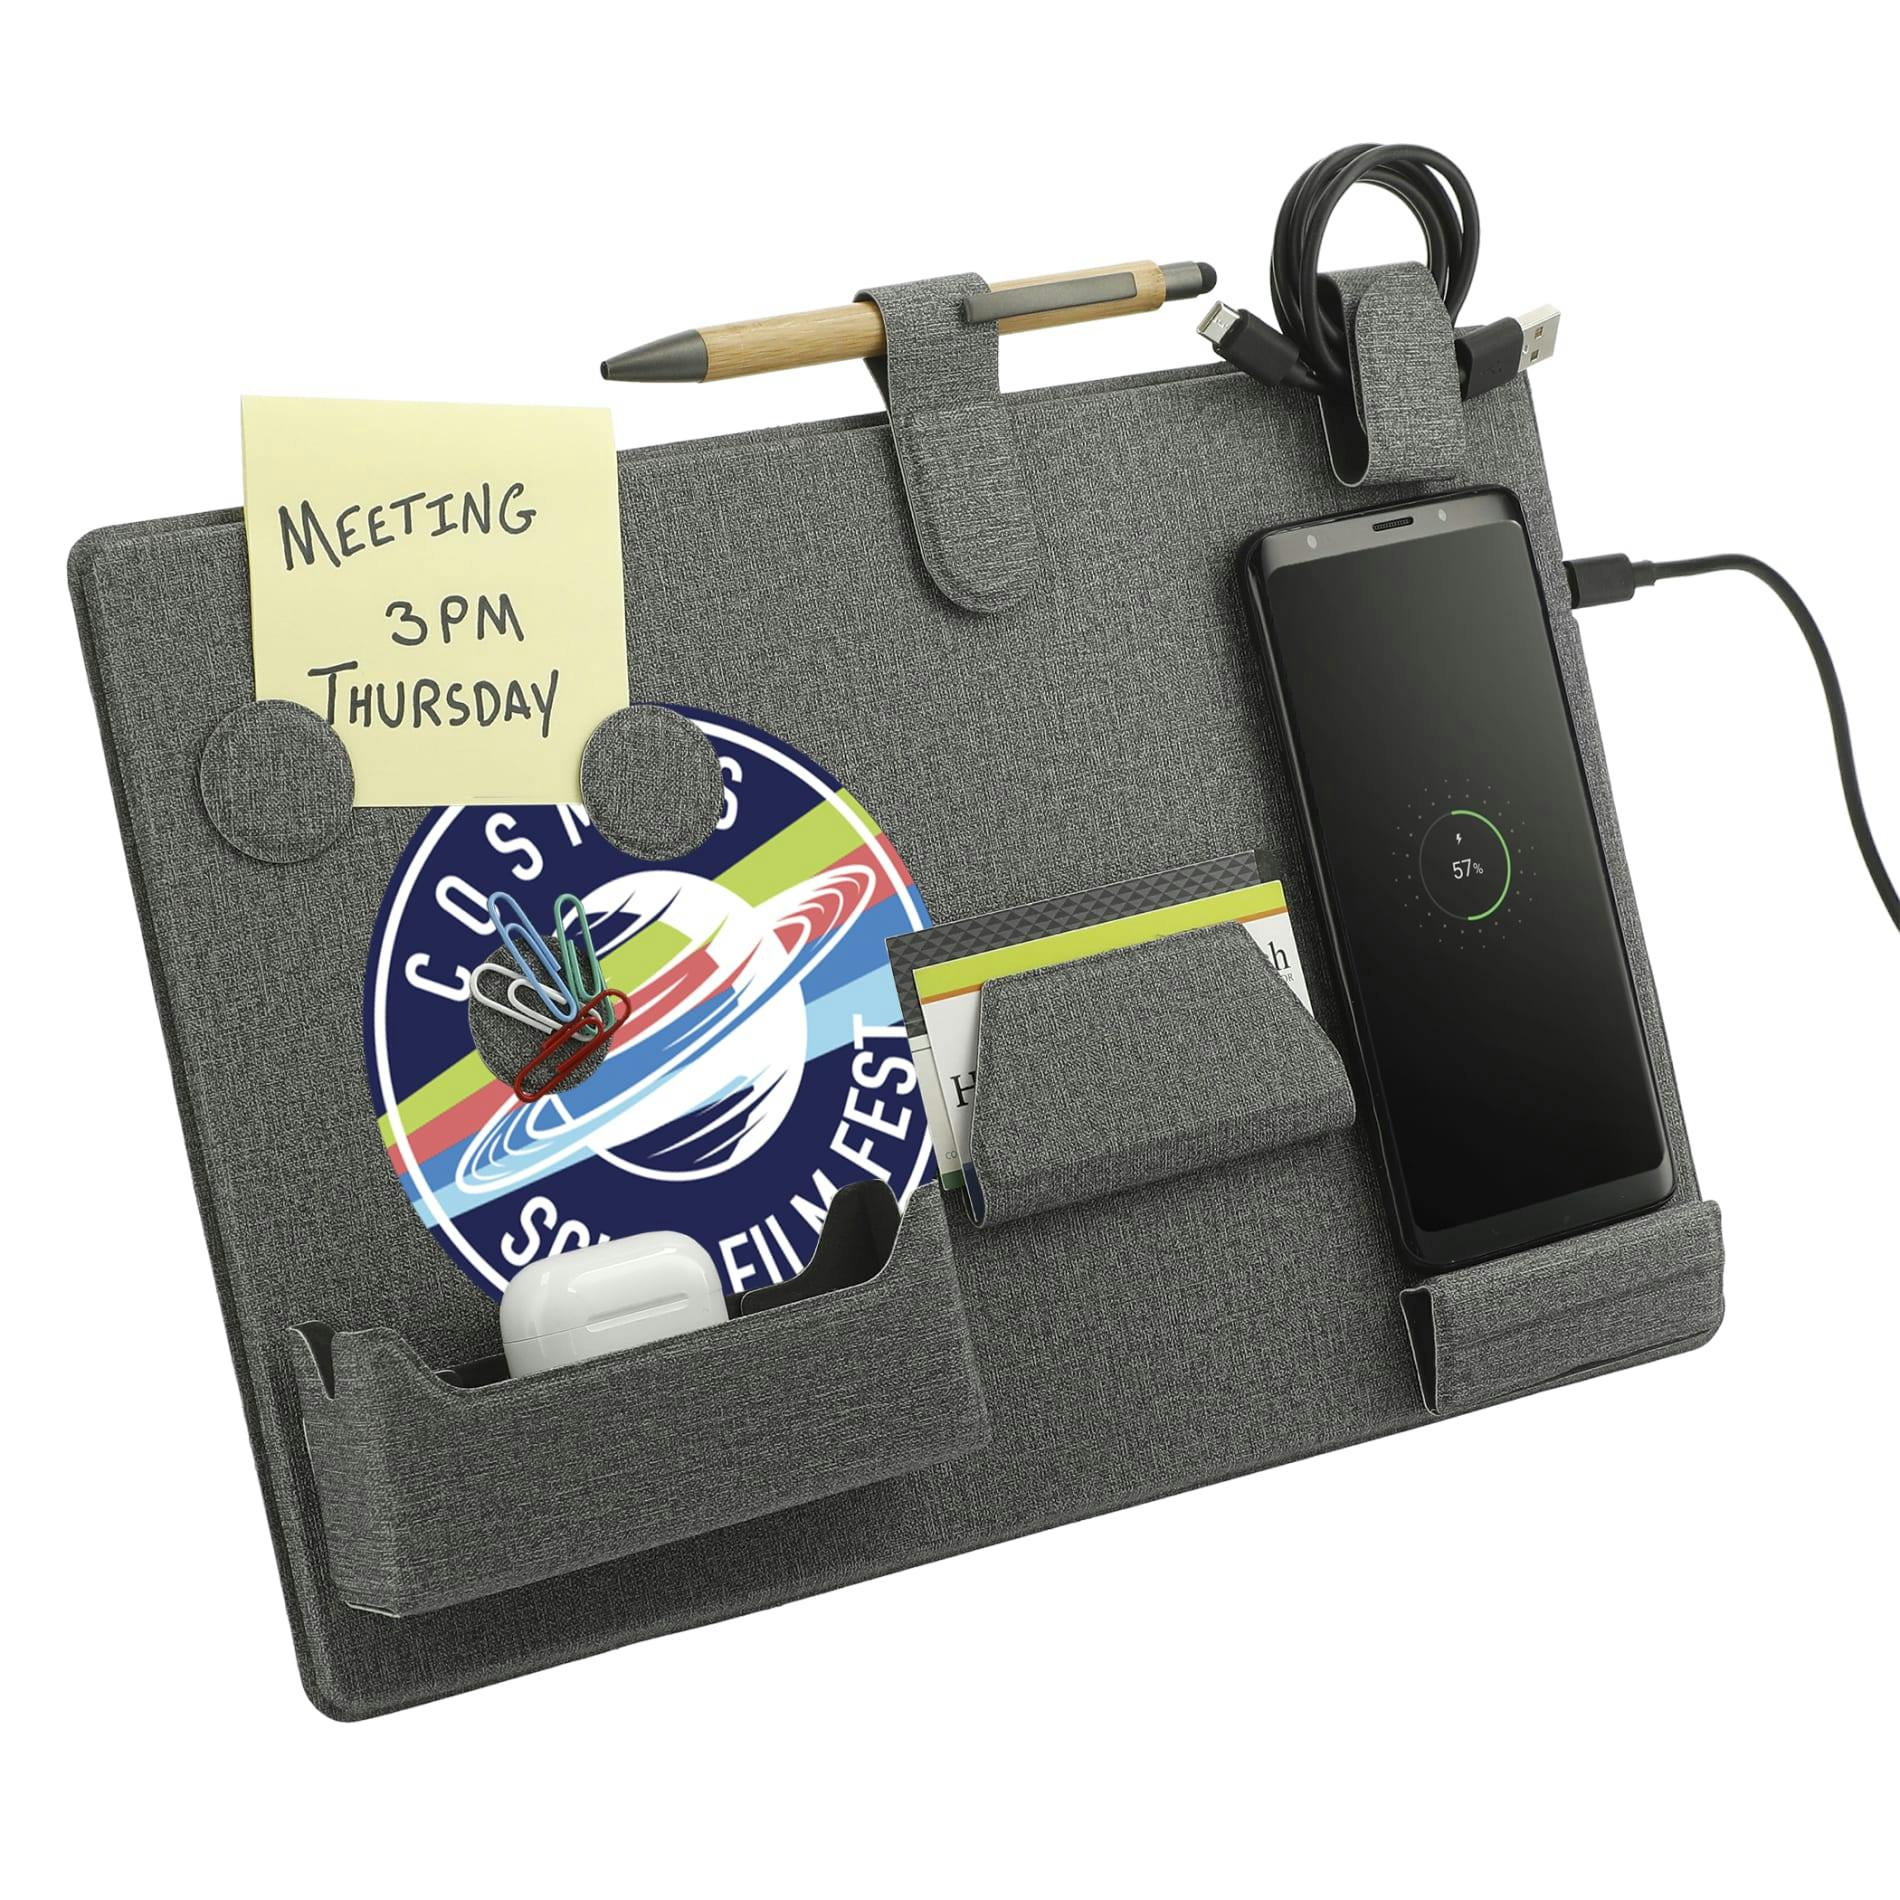 MagClick™ Fast Wireless Charging Desk Organizer - additional Image 5